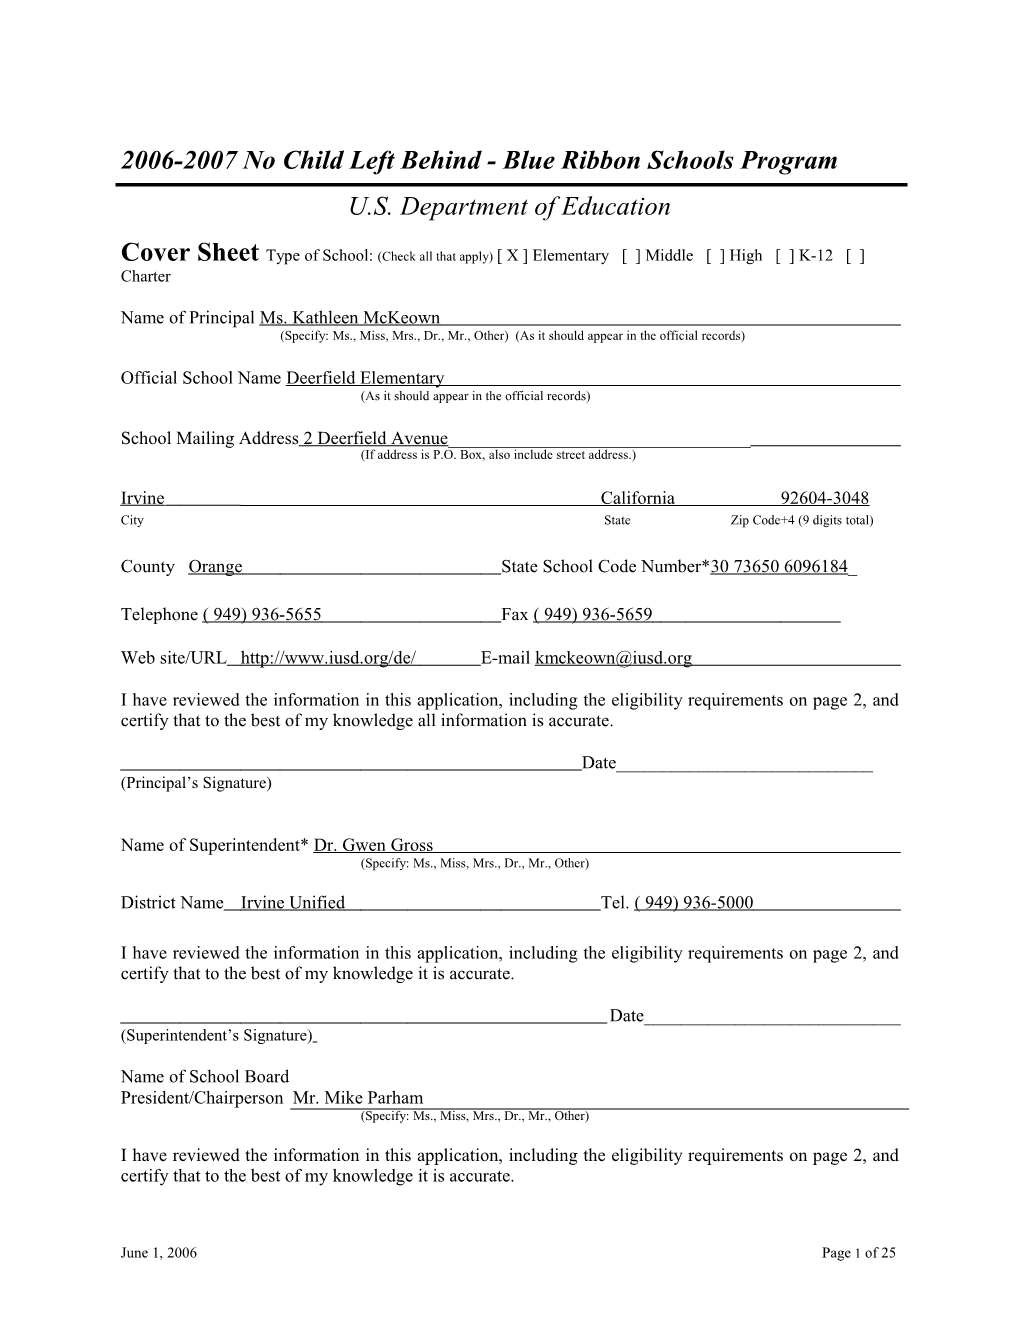 Application: 2006-2007, No Child Left Behind - Blue Ribbon Schools Program (MS Word)